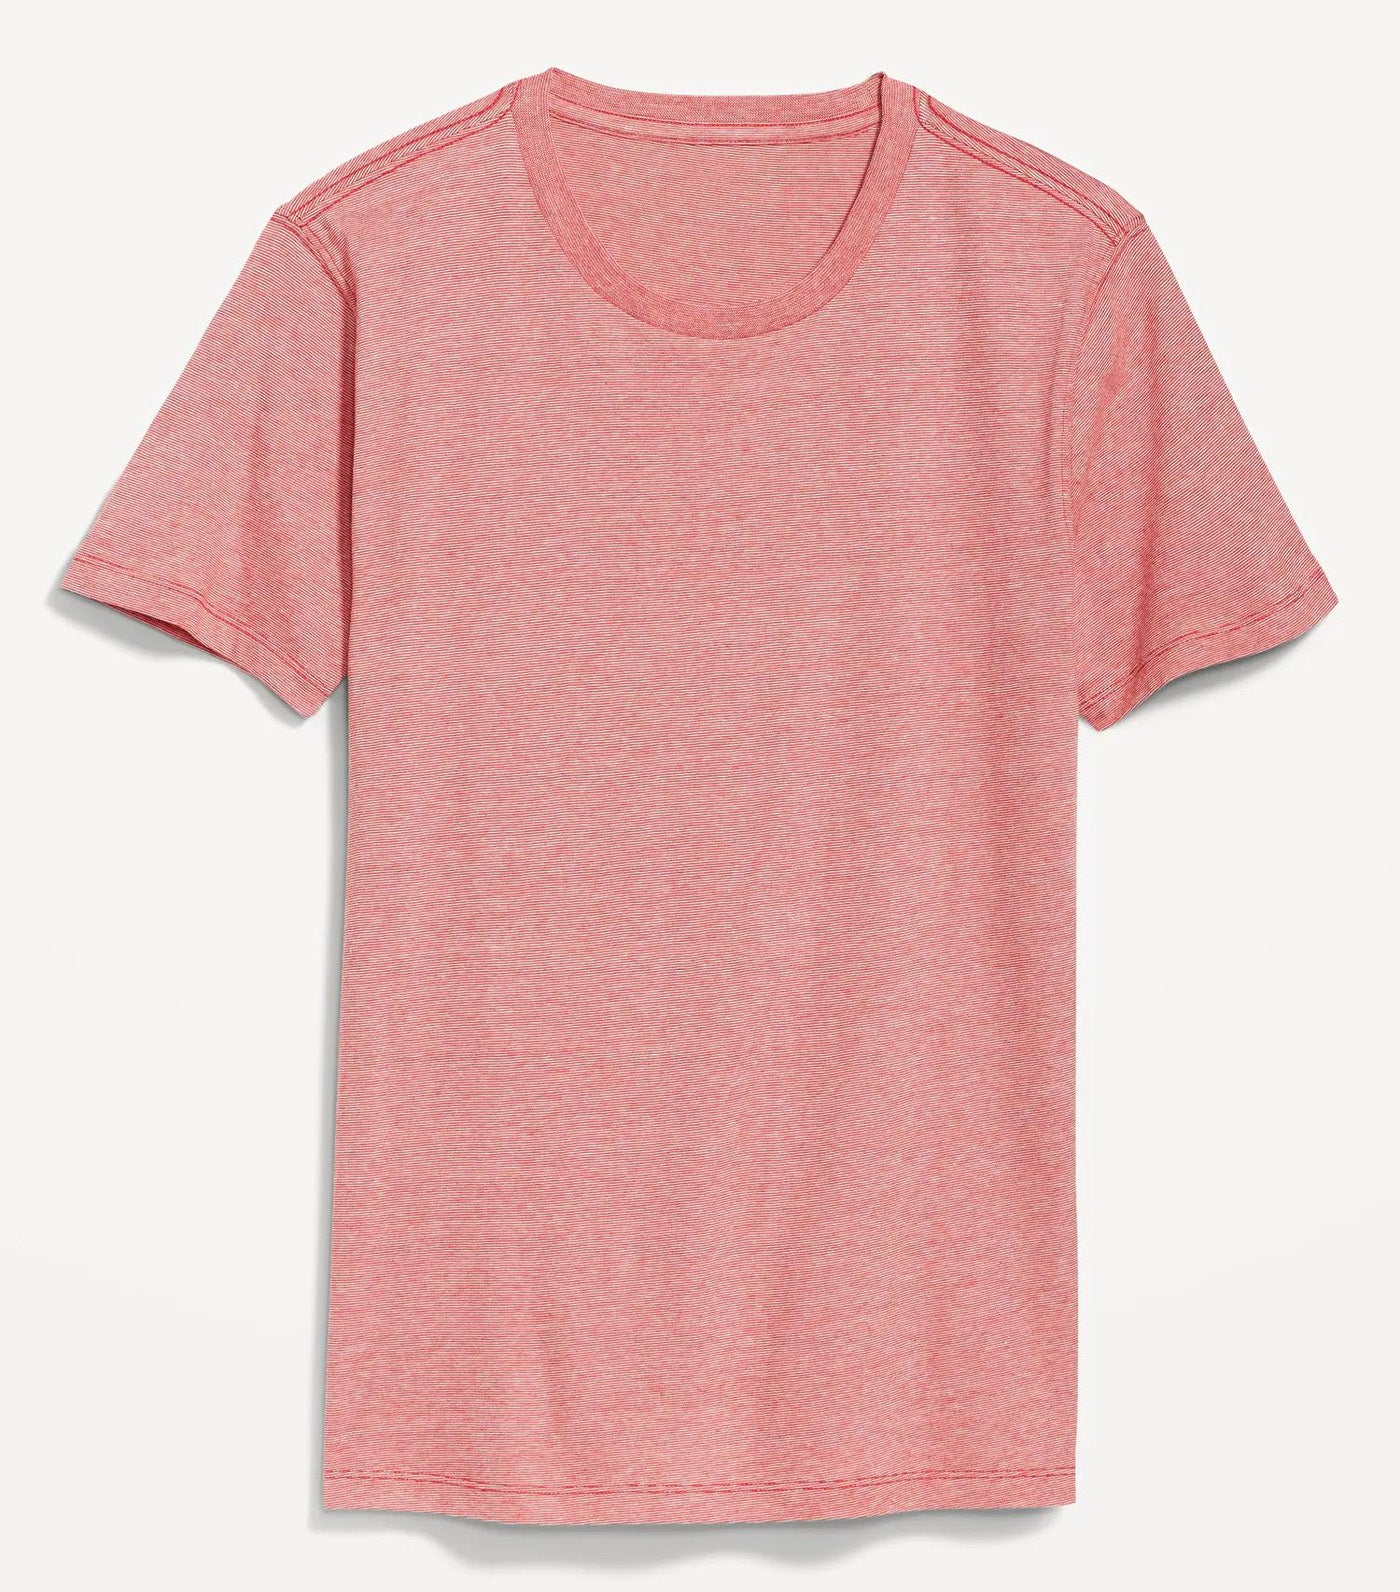 Soft-Washed Crew-Neck T-Shirt for Men Tomato Juice